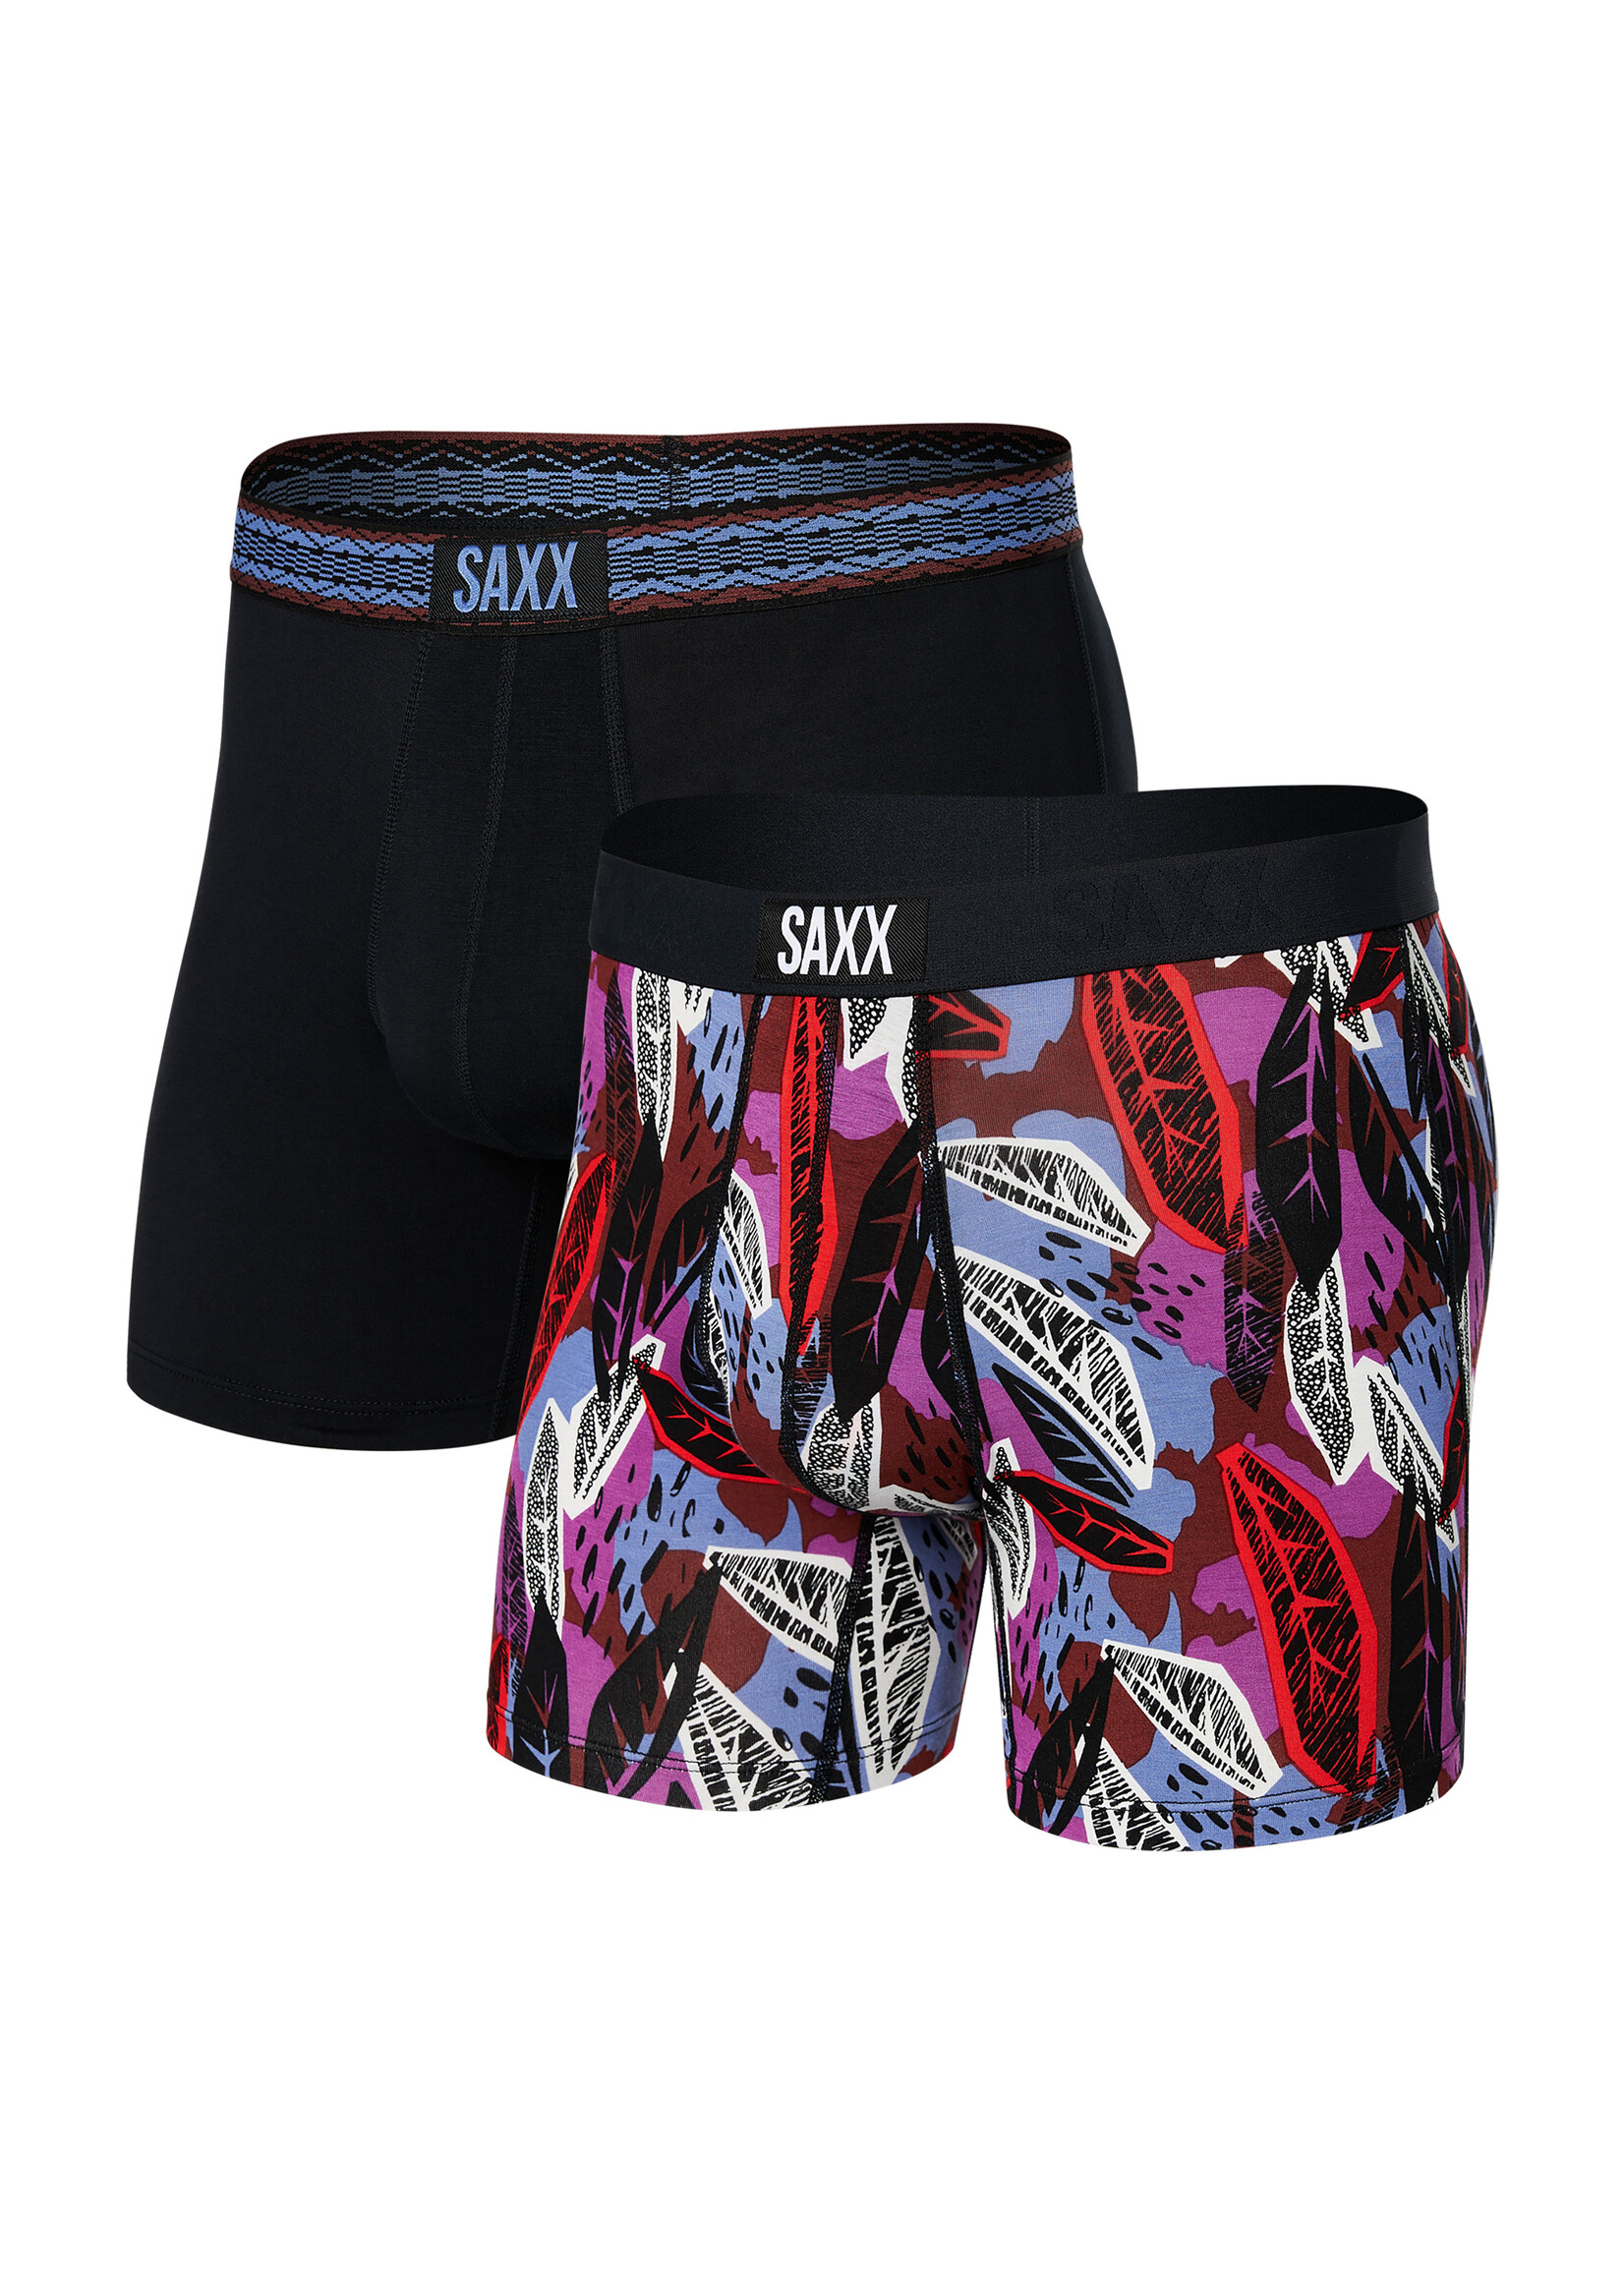 Saxx Boxer Briefs for Men - Poshmark